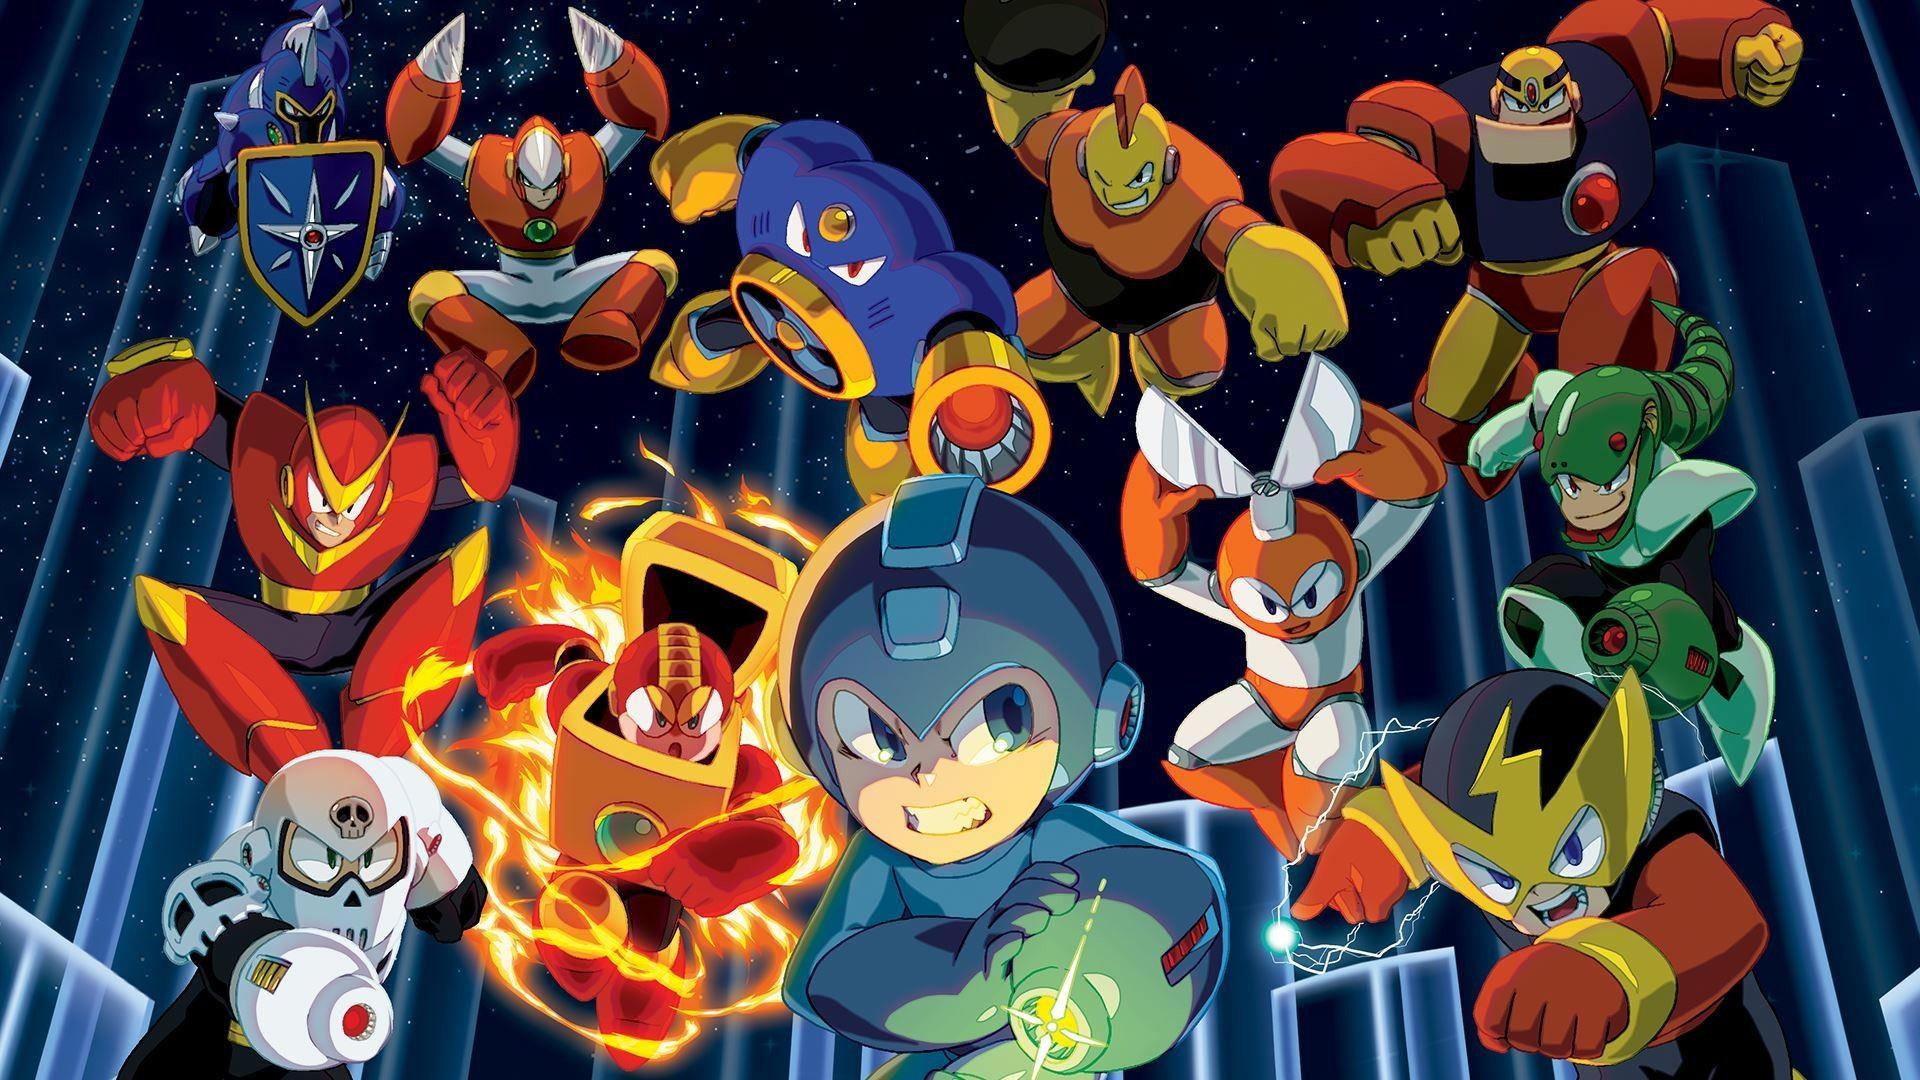 Mega Man Wallpaper background picture